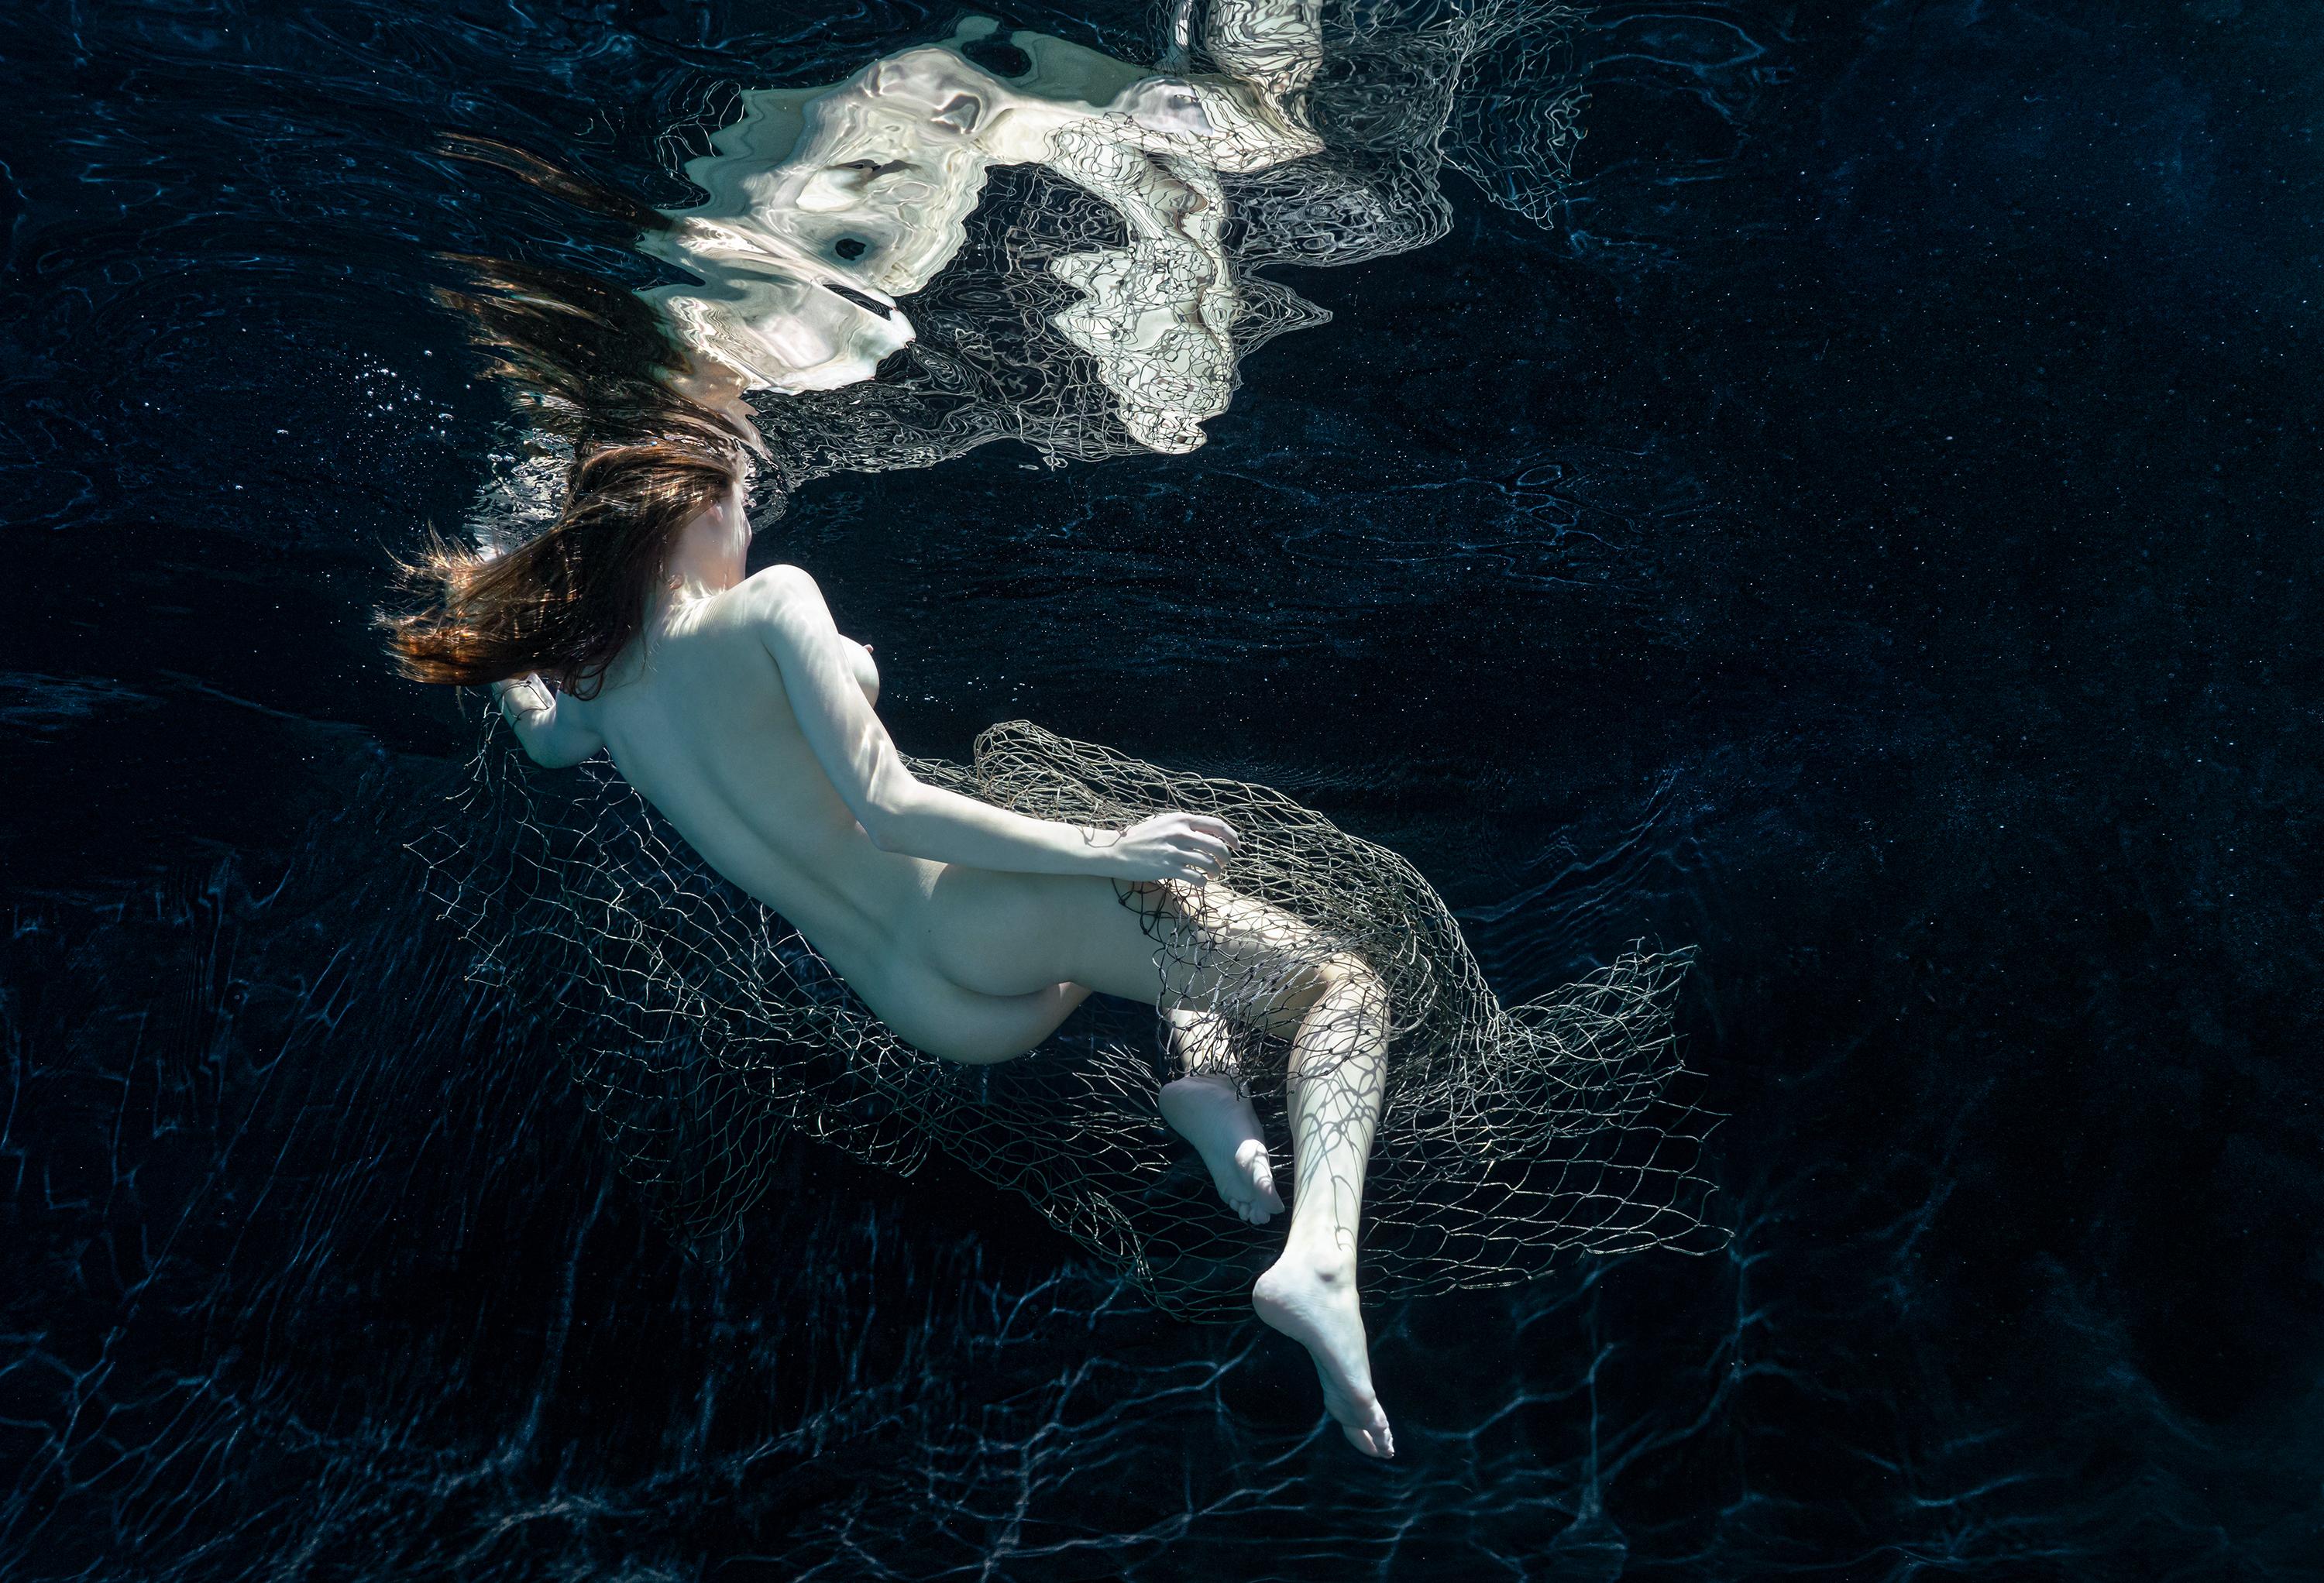 Constellation - underwater nude photograph - archival pigment print 16x24"